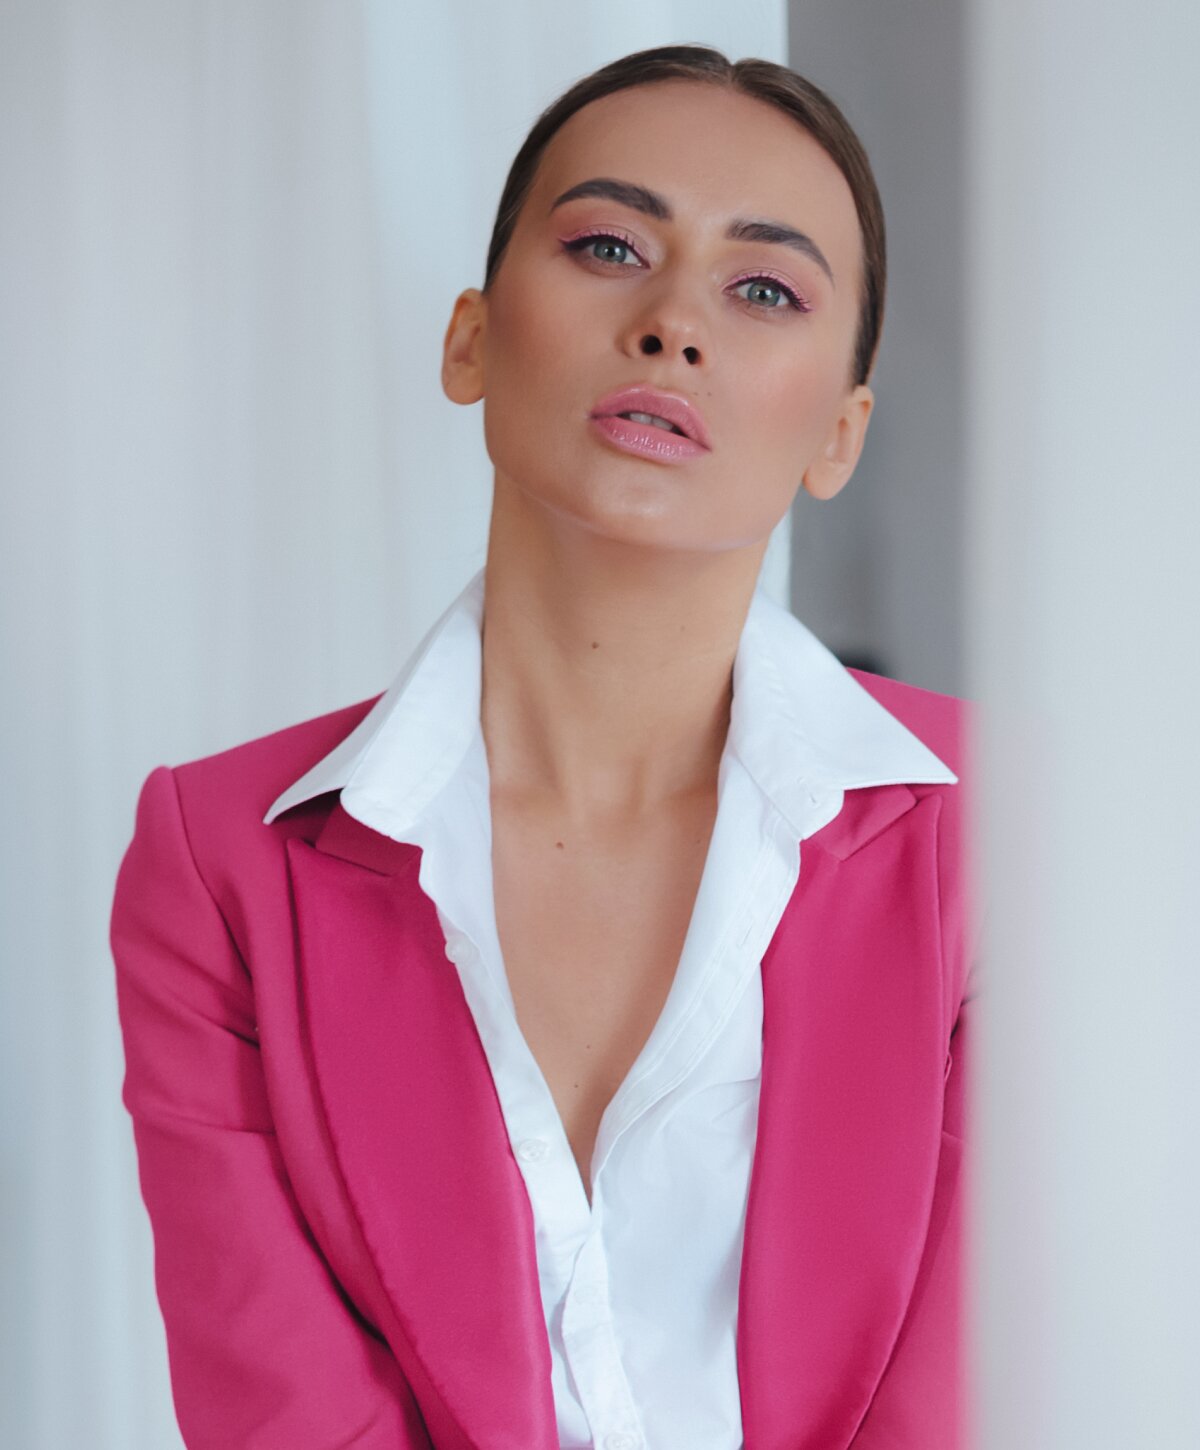 Westlake facelift model wearing a pink blazer